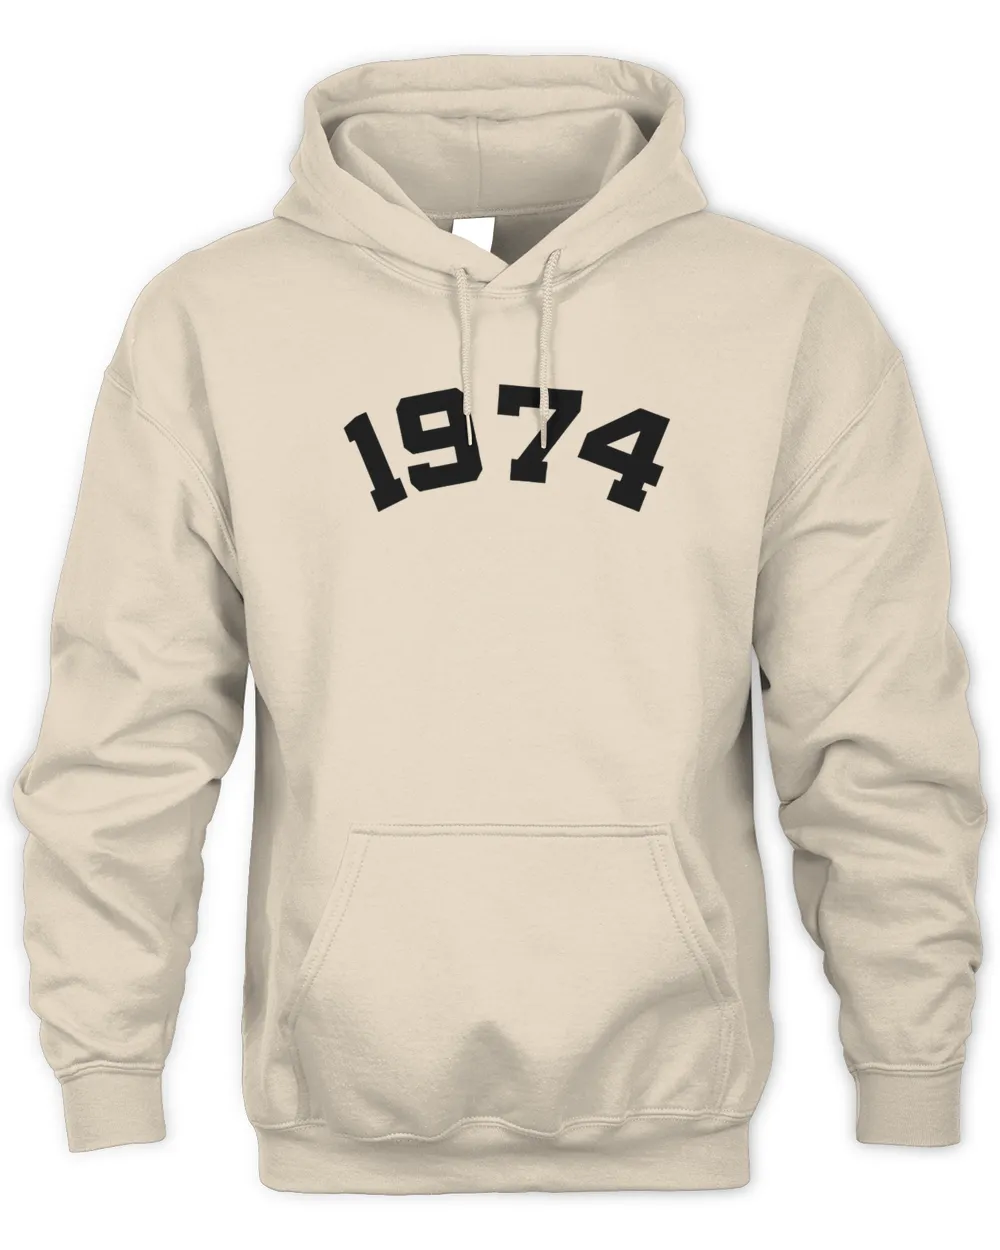 1974 Sweatshirt 50th Birthday Sweatshirt